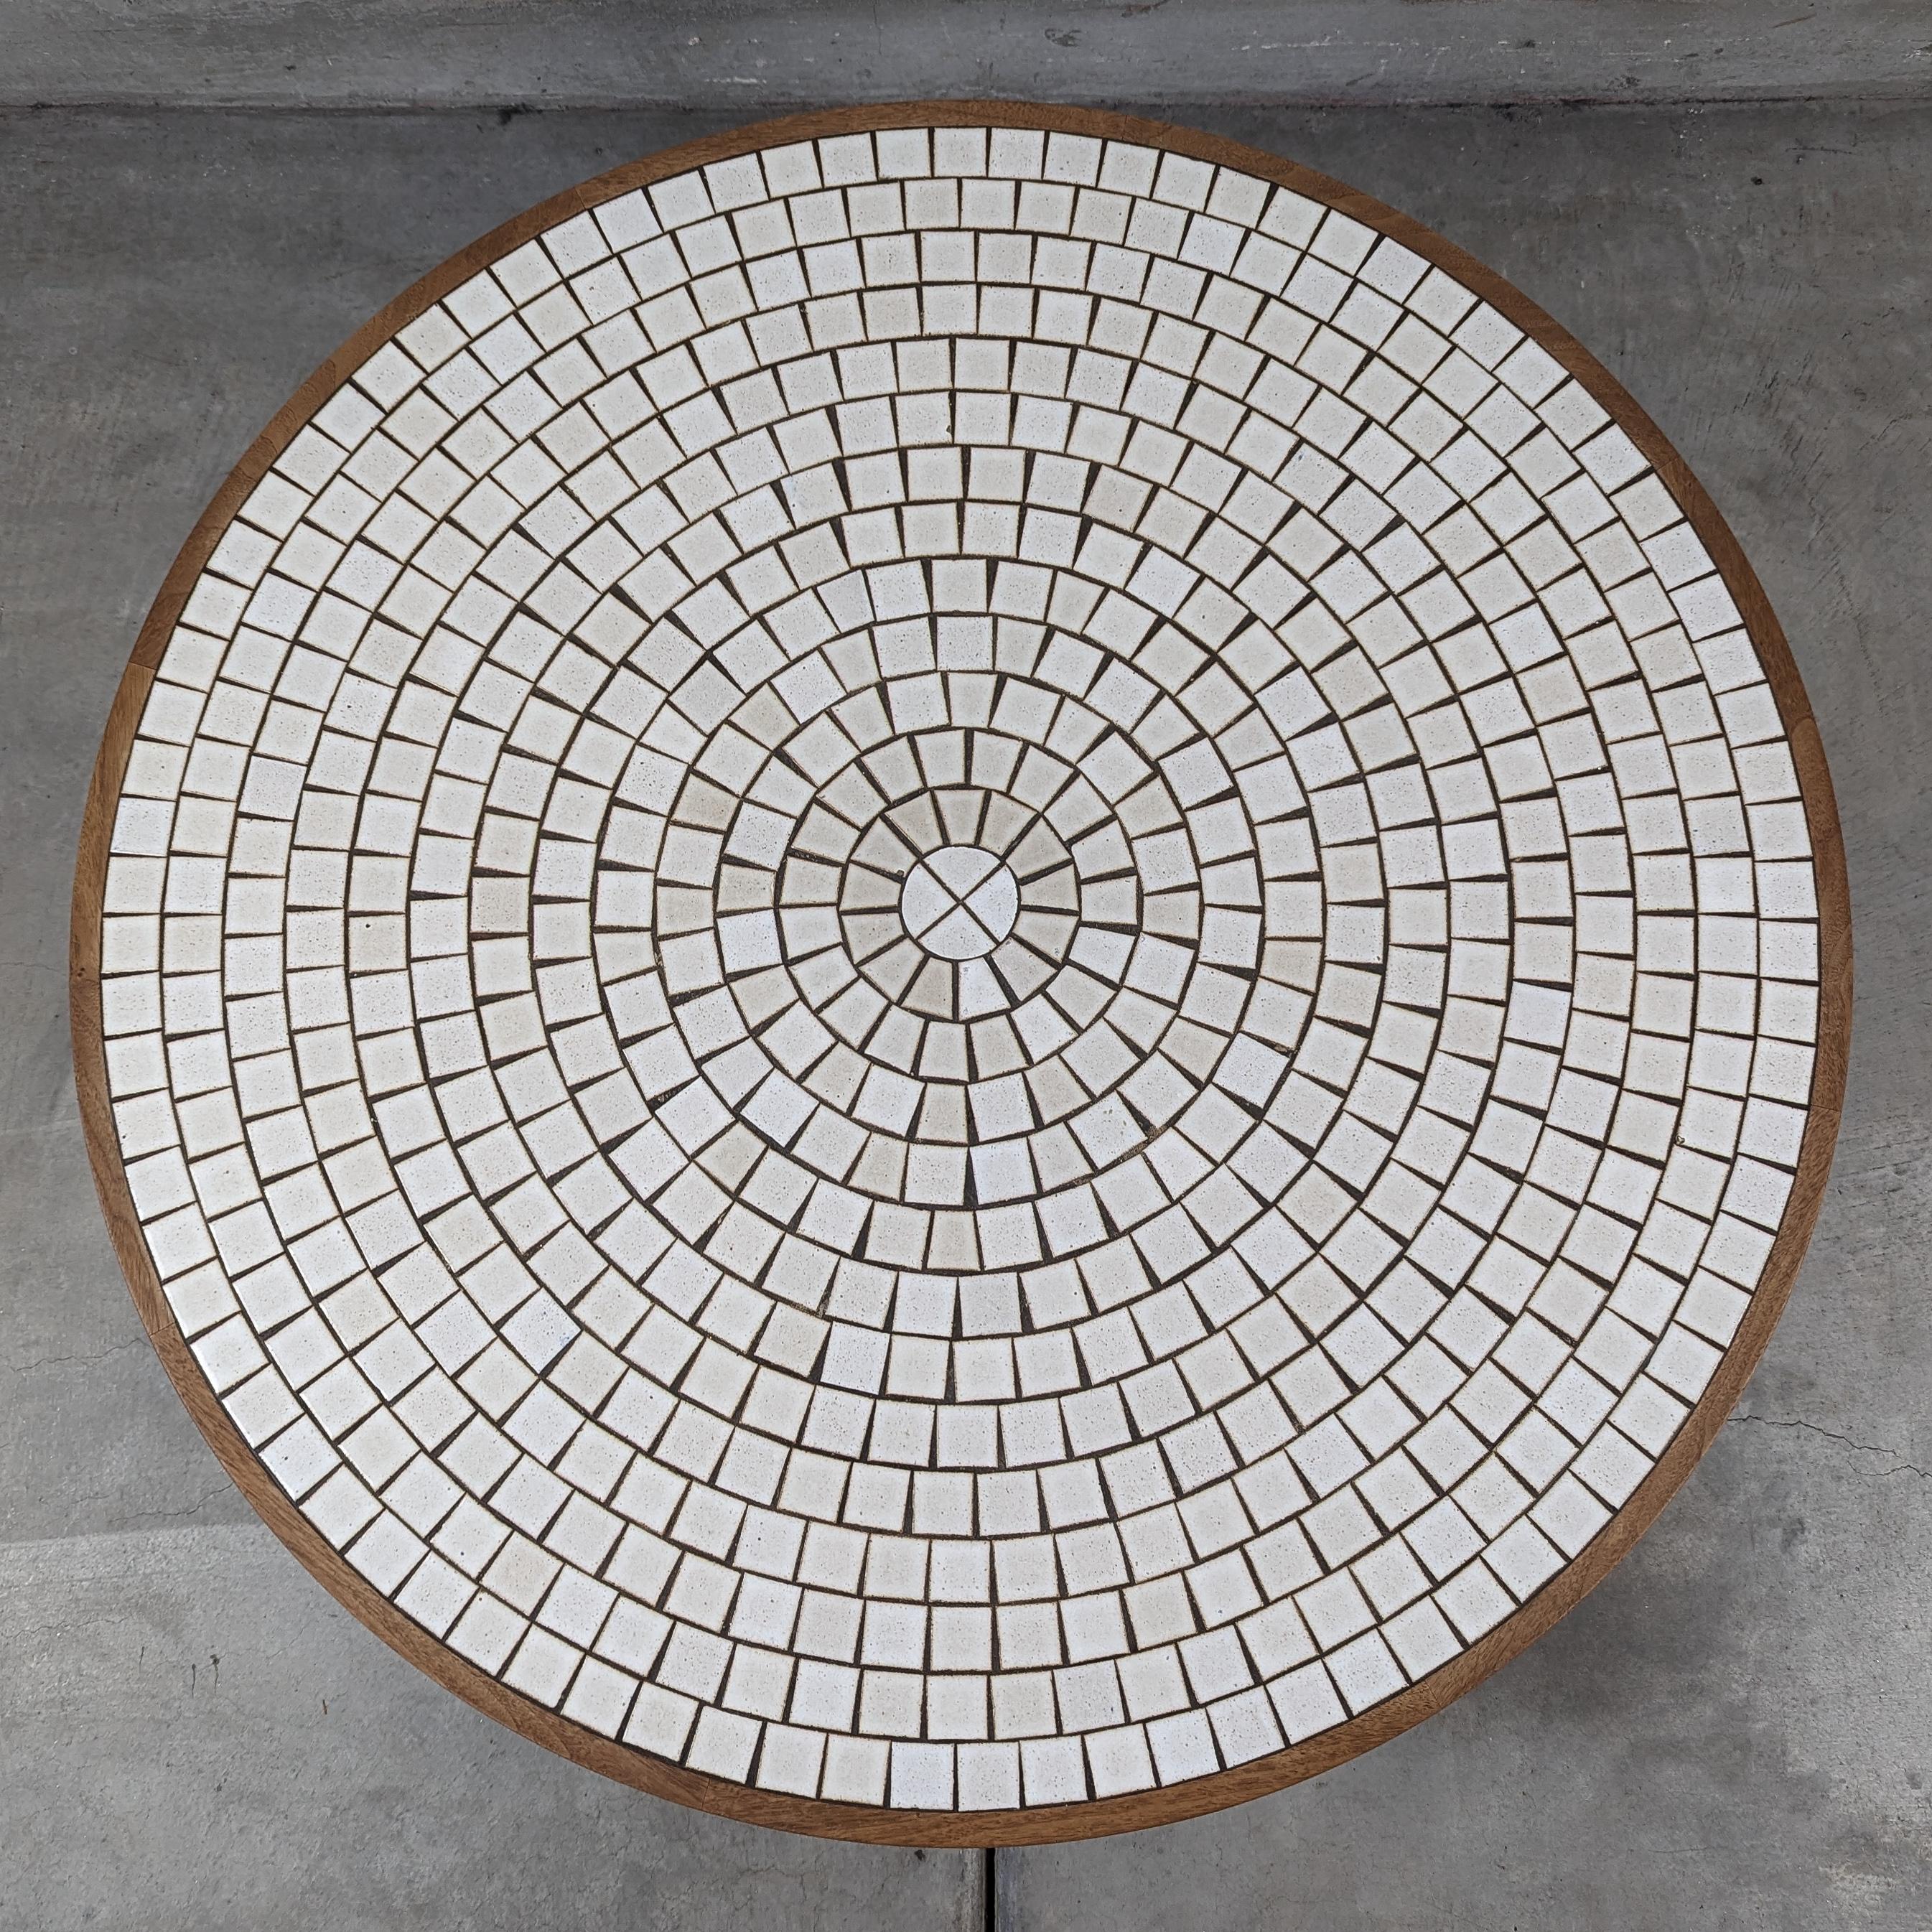 Walnut Mid Century Modern Round Coffee Table w/ Tile Top by Gordon & Jane Martz, c1960s For Sale